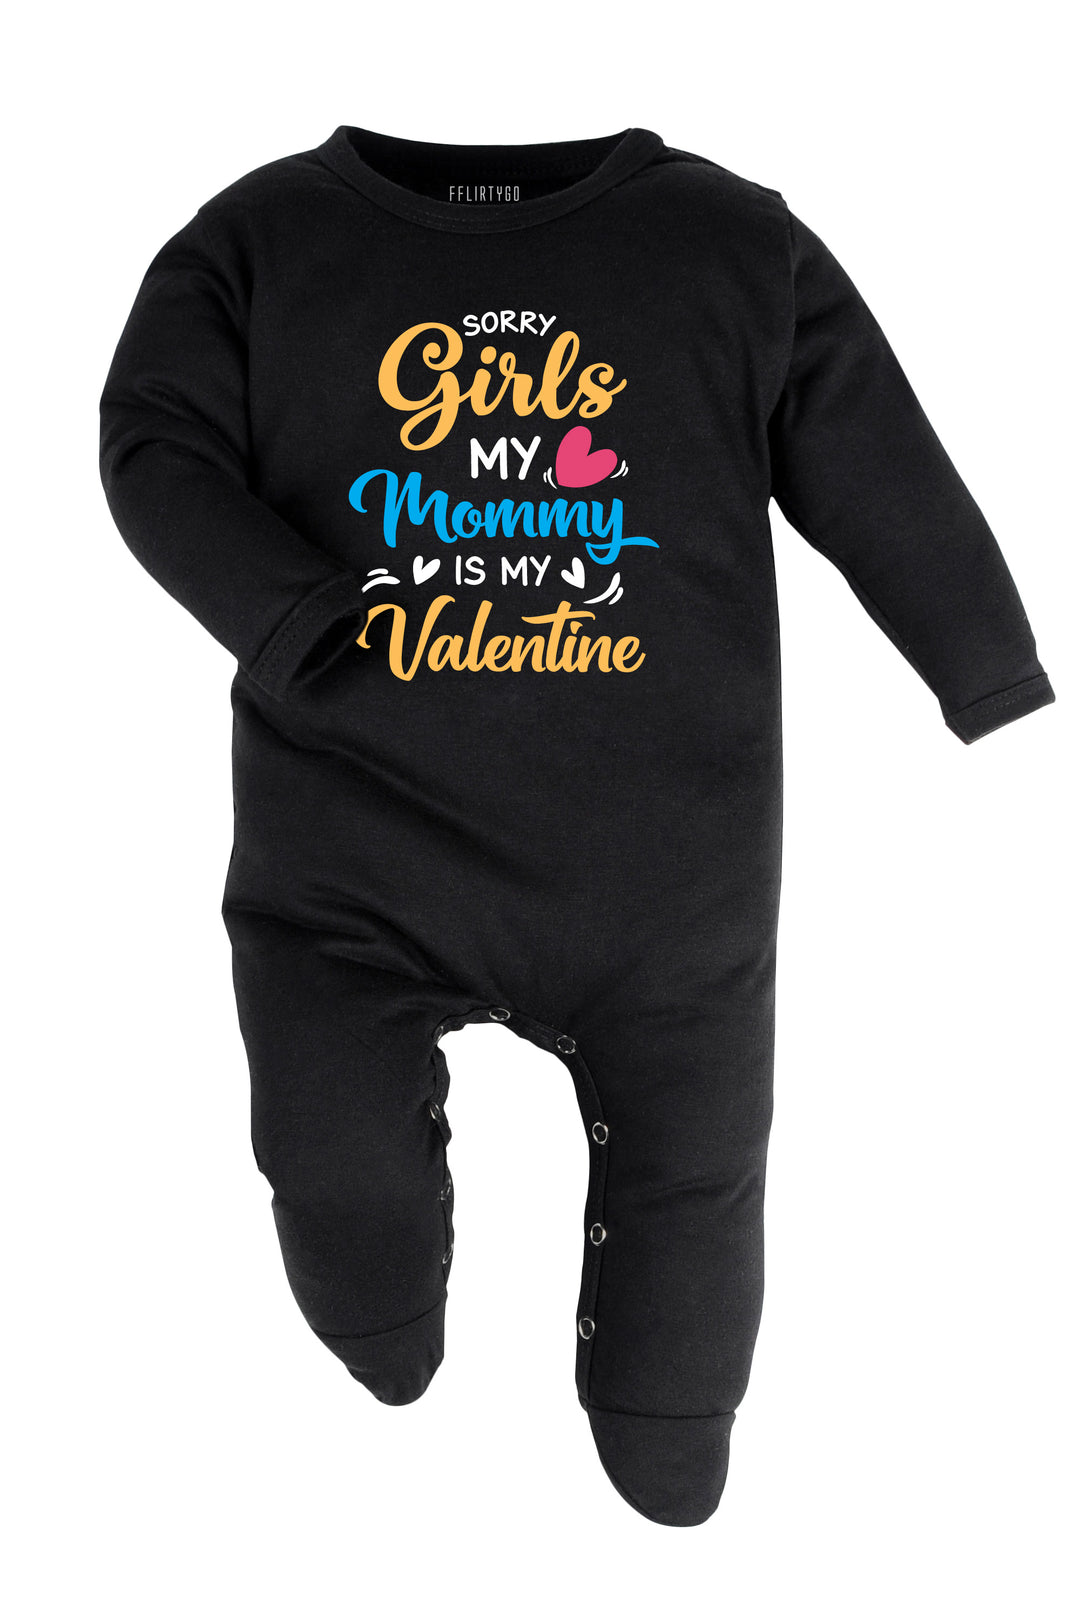 Sorry Girls My Mommy is my Valentine Baby Romper | Onesies